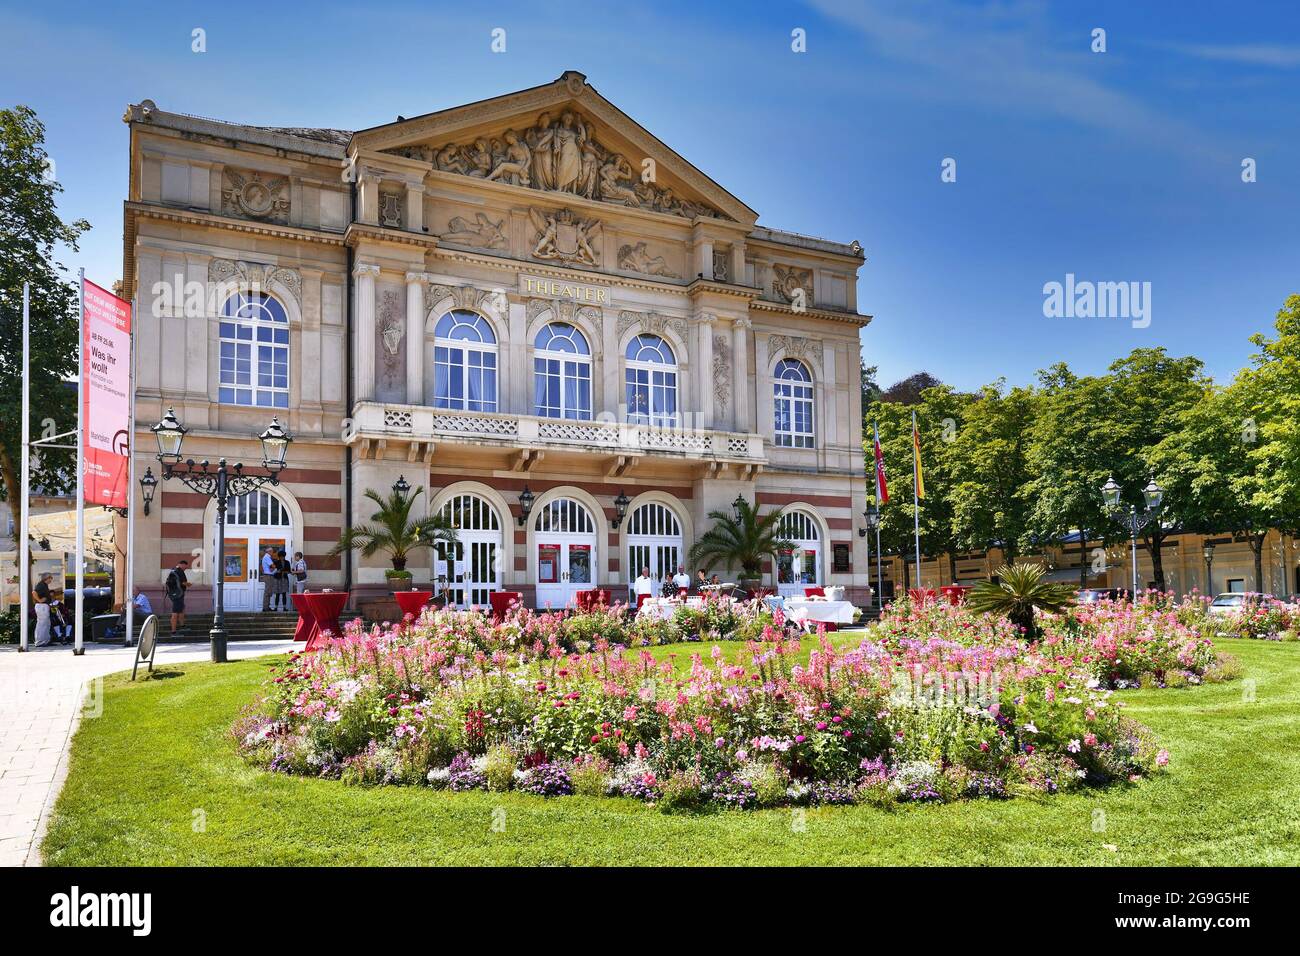 Baden-Baden, Germany - July 2021: Historic theater called 'Theater Baden-Baden' at Goetheplatz square Stock Photo